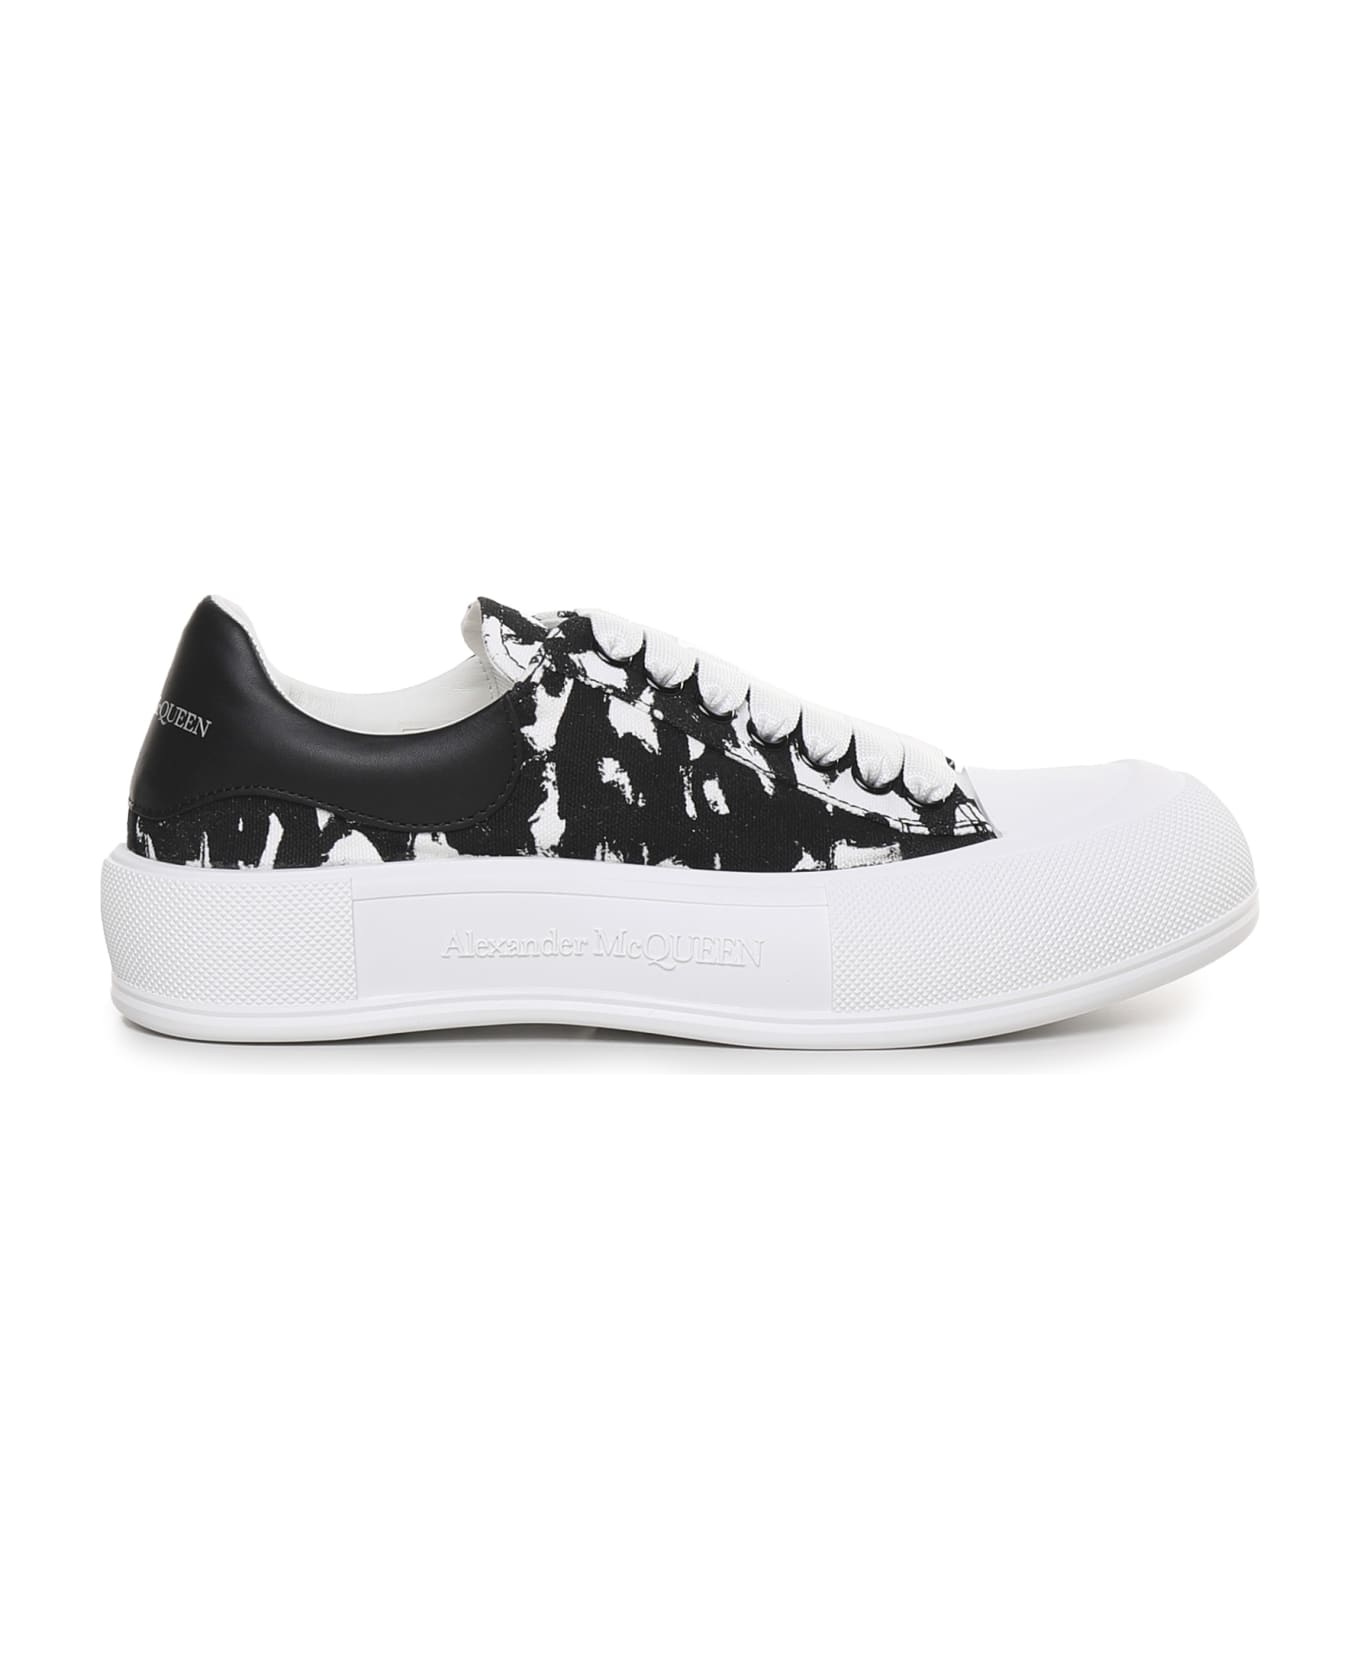 Alexander McQueen Sneakers Deck Plimsoll In Calfskin - White, black